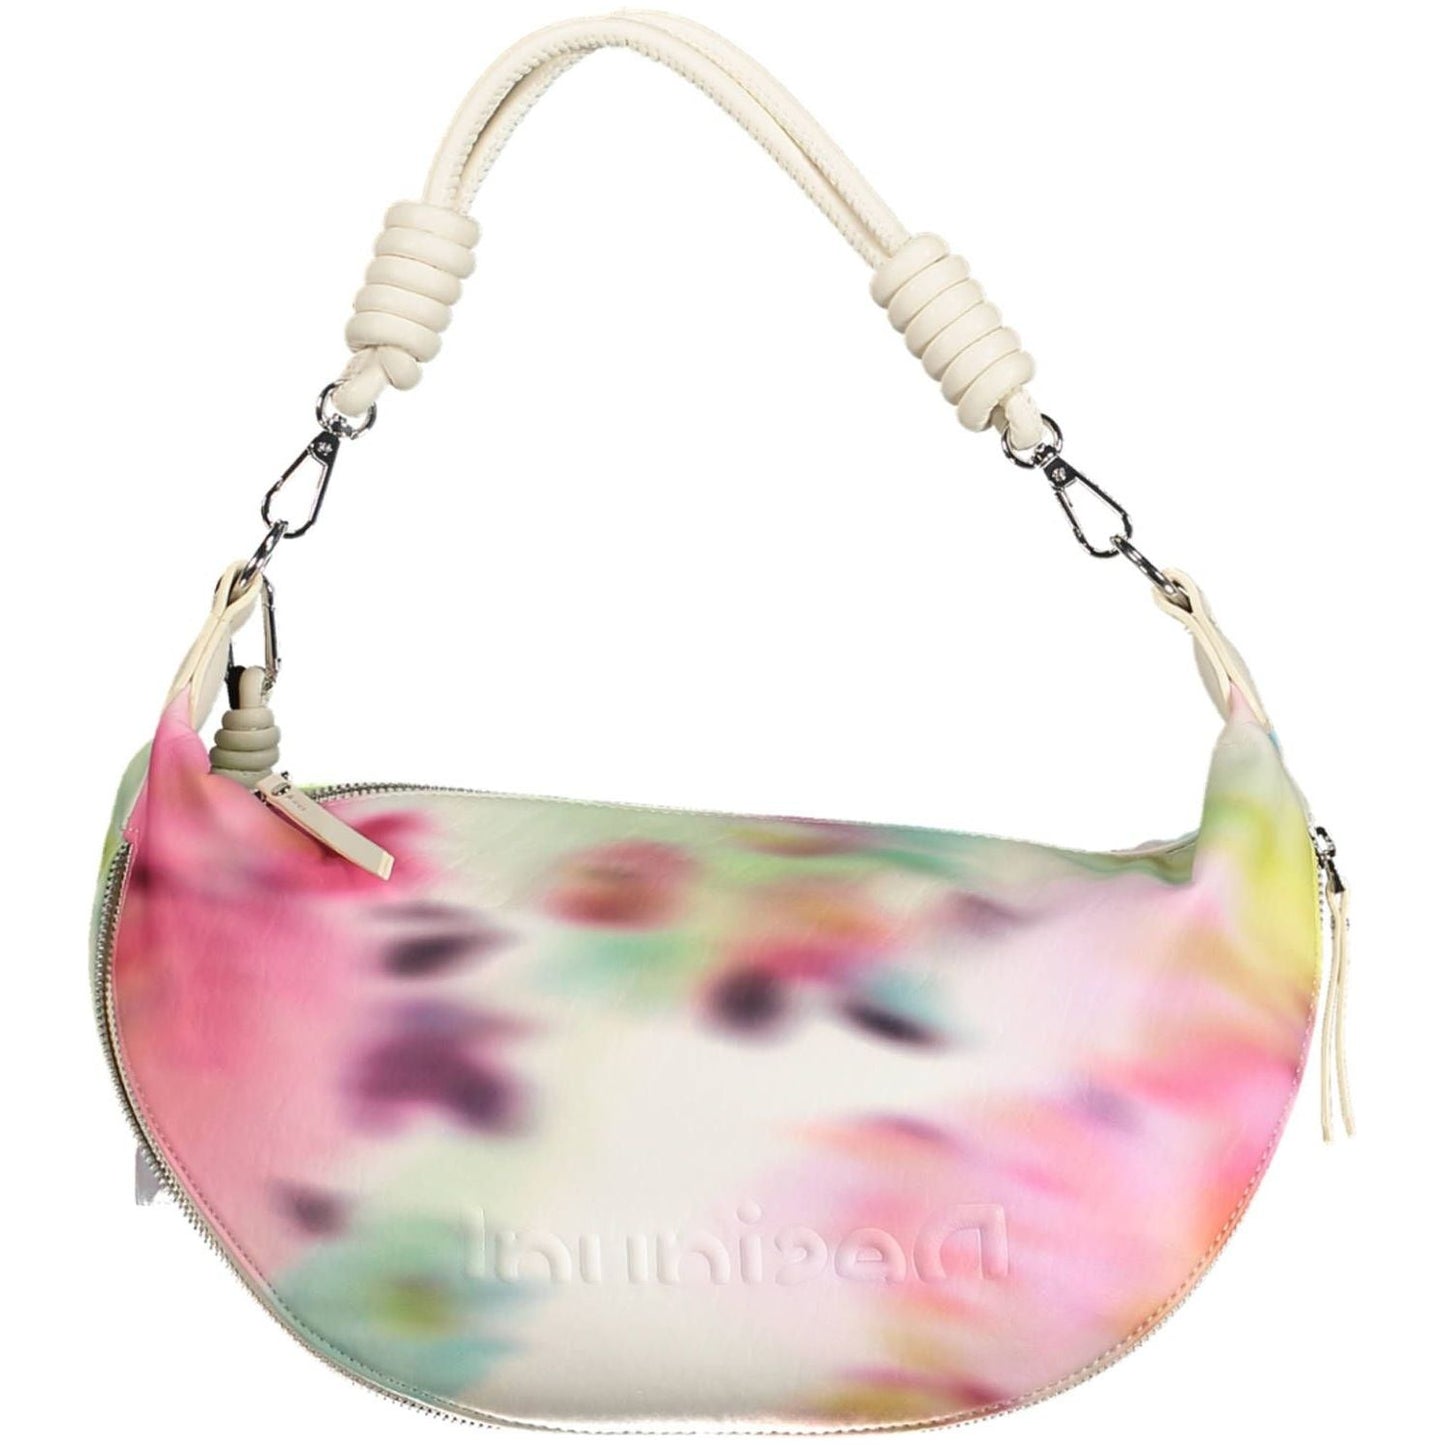 Desigual Chic White Expandable Handbag with Contrasting Accents chic-white-expandable-handbag-with-contrasting-accents